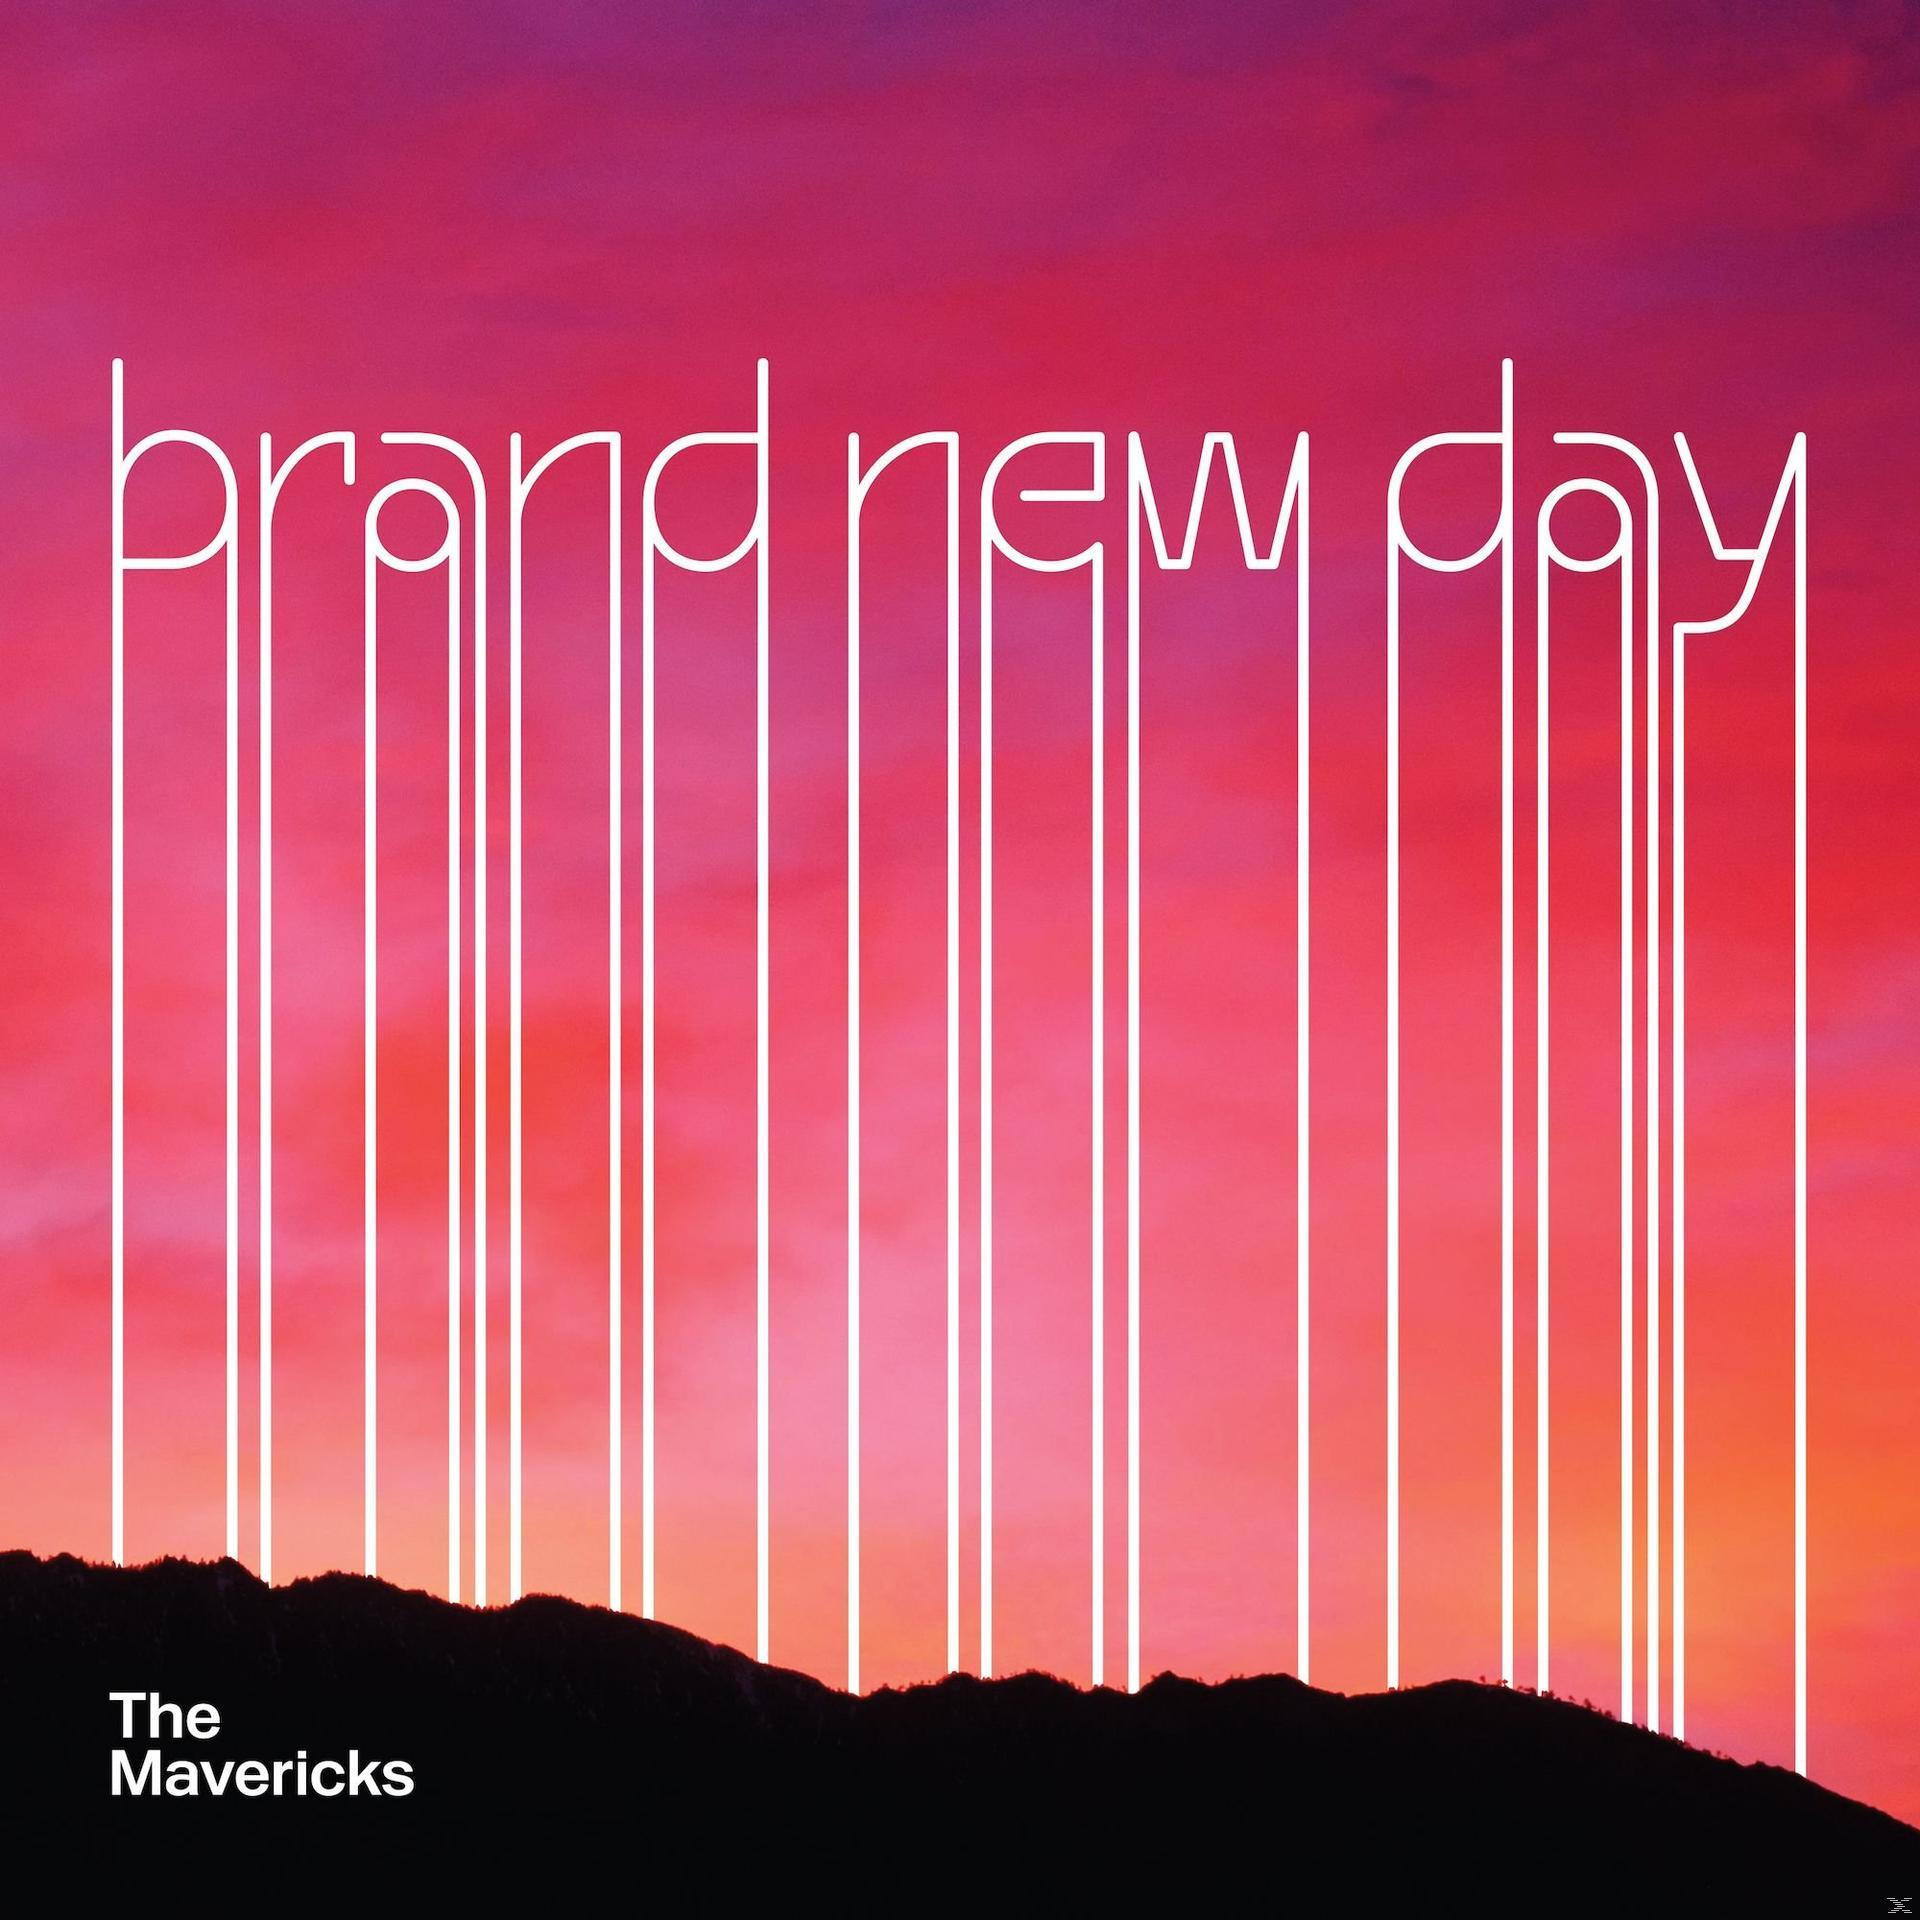 The Mavericks - - New Day (CD) Brand